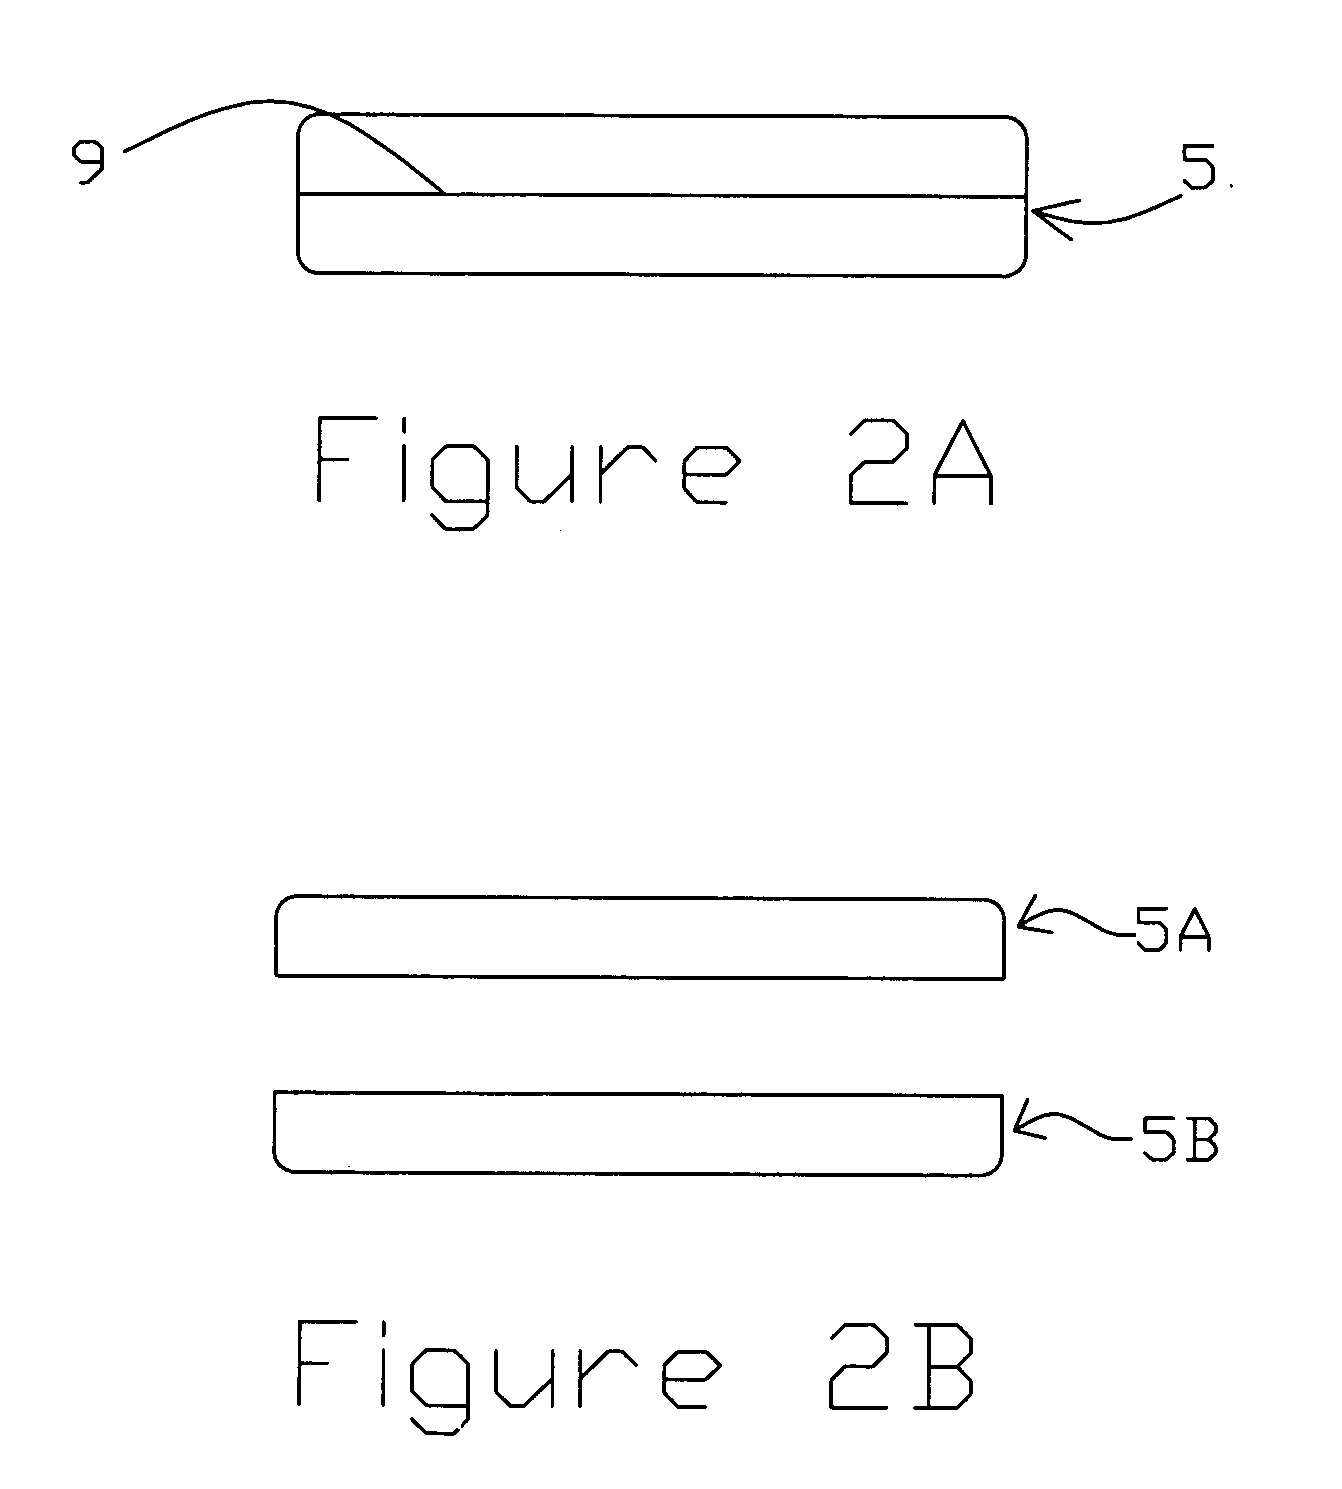 Multipurpose label sheet form